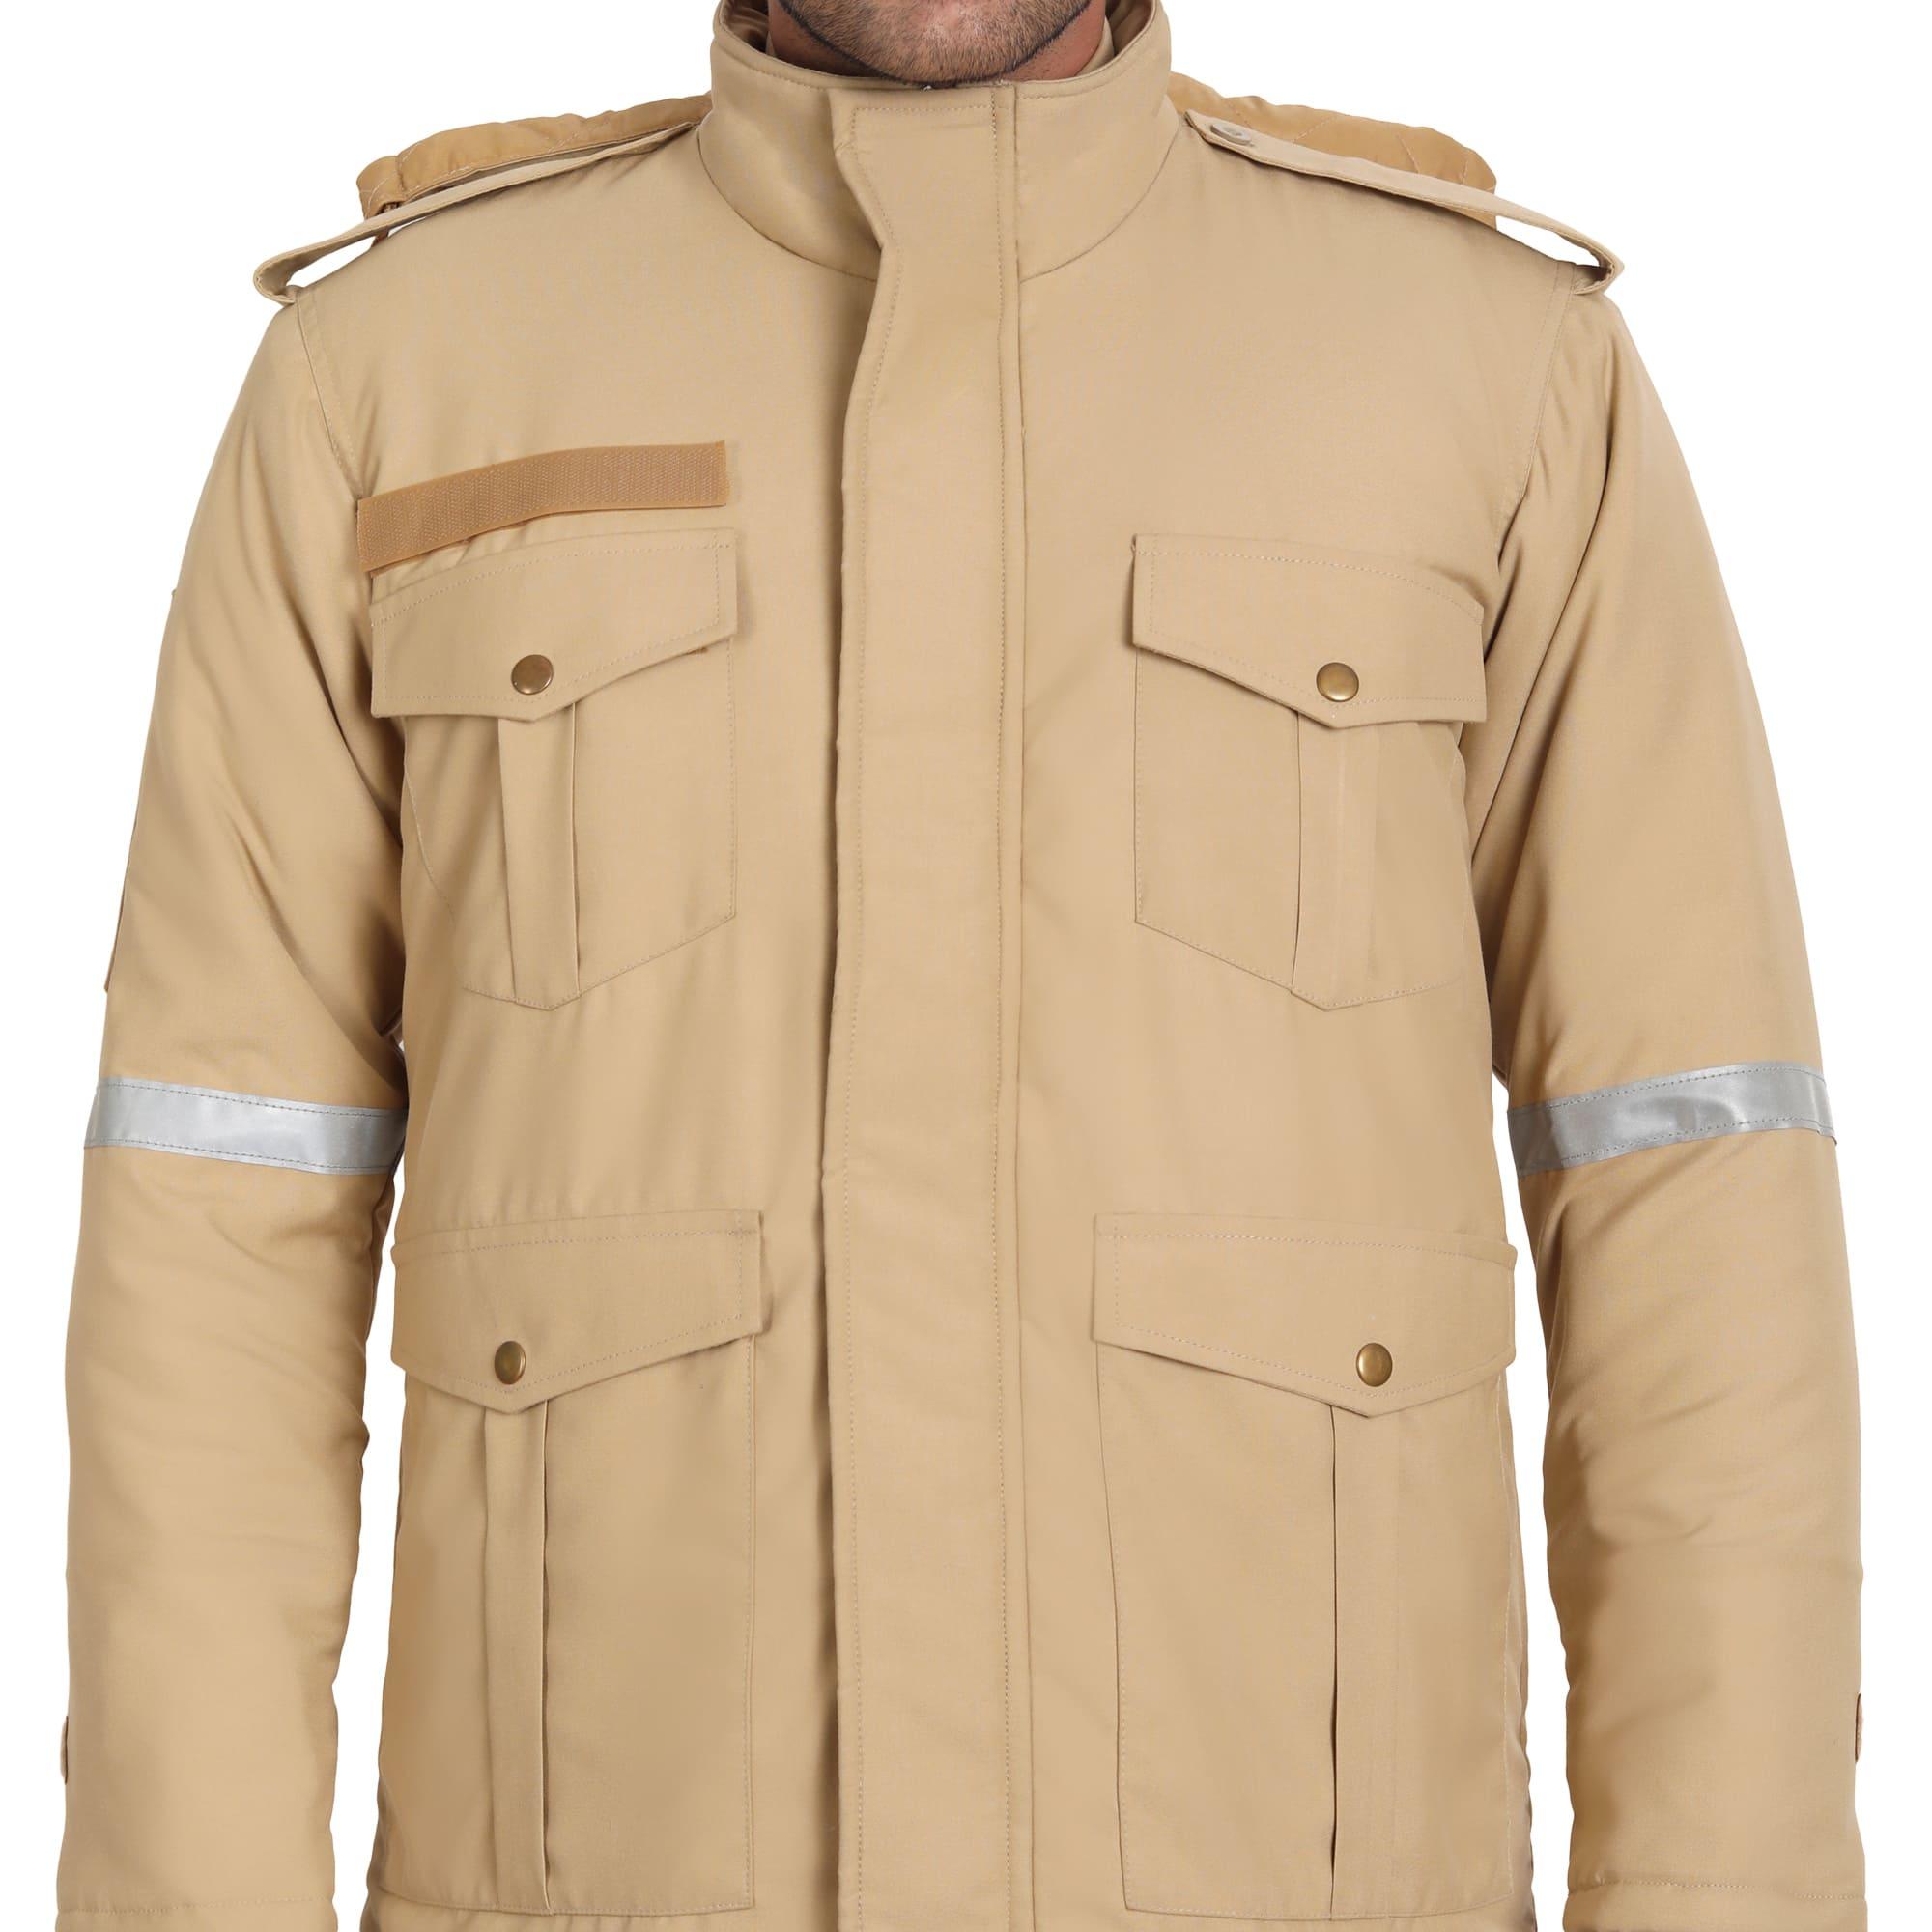 Superpro Jacket & Pants Set (Khaki colour), Men's Fashion, Coats, Jackets  and Outerwear on Carousell